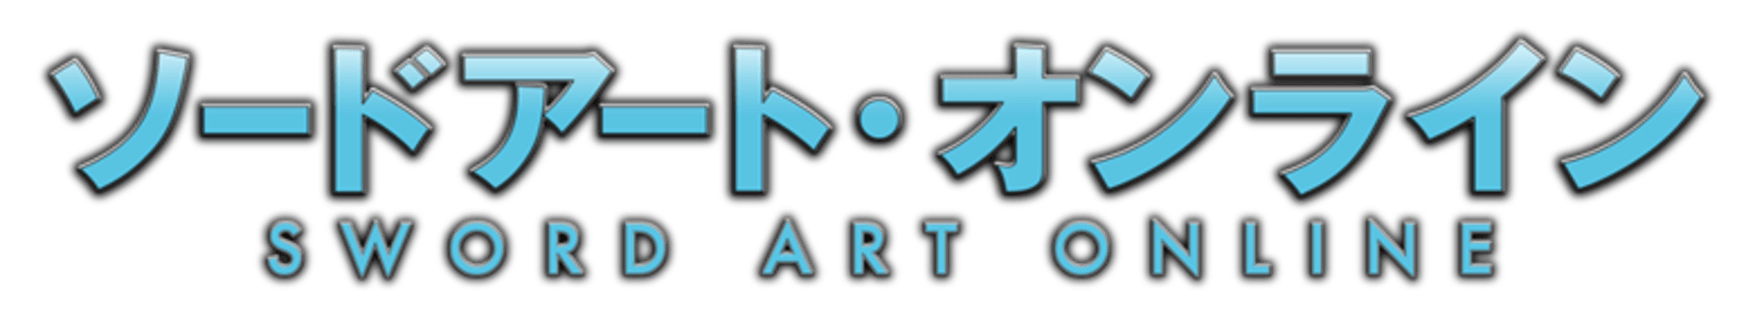 Sao Logo - Sword Art Online